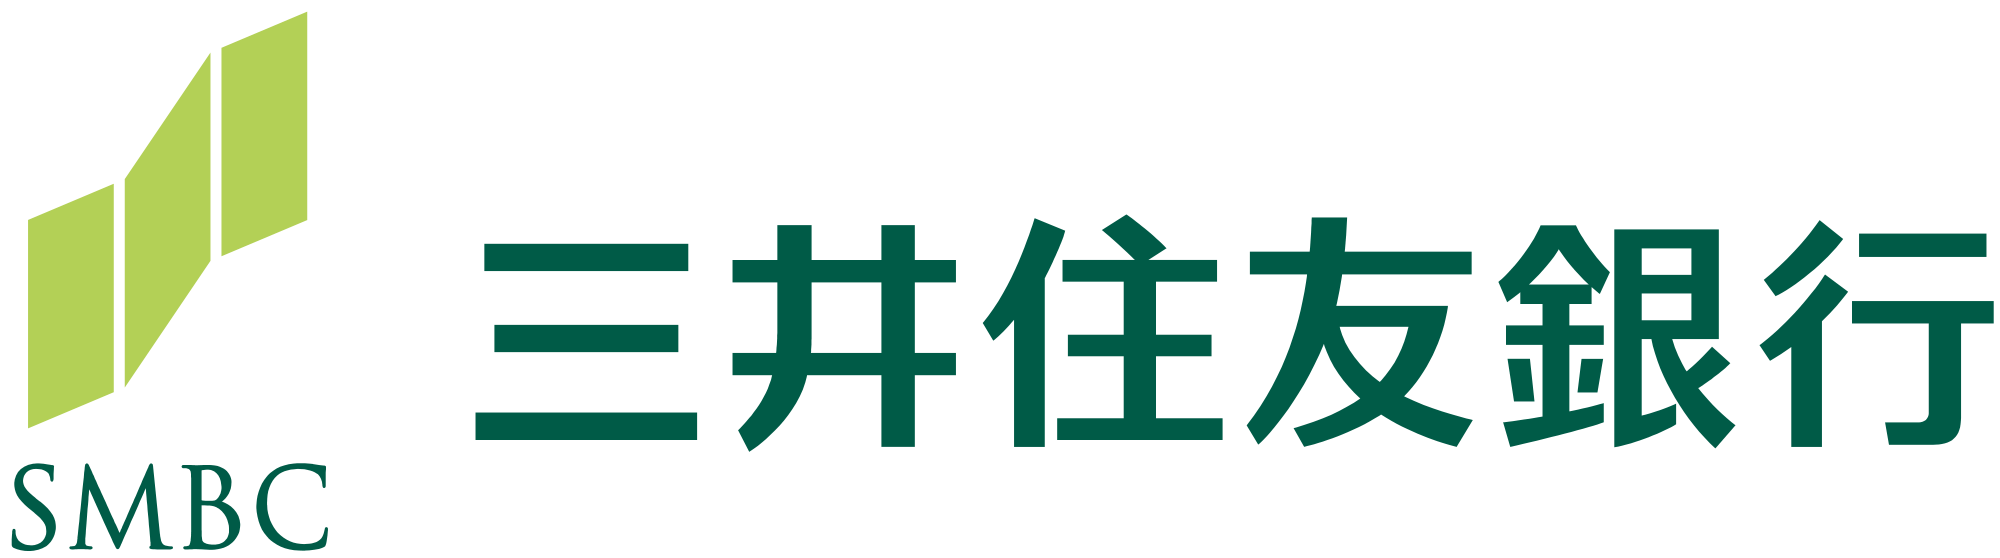 SMBC Logo - Sumitomo Mitsui Banking Logo.svg